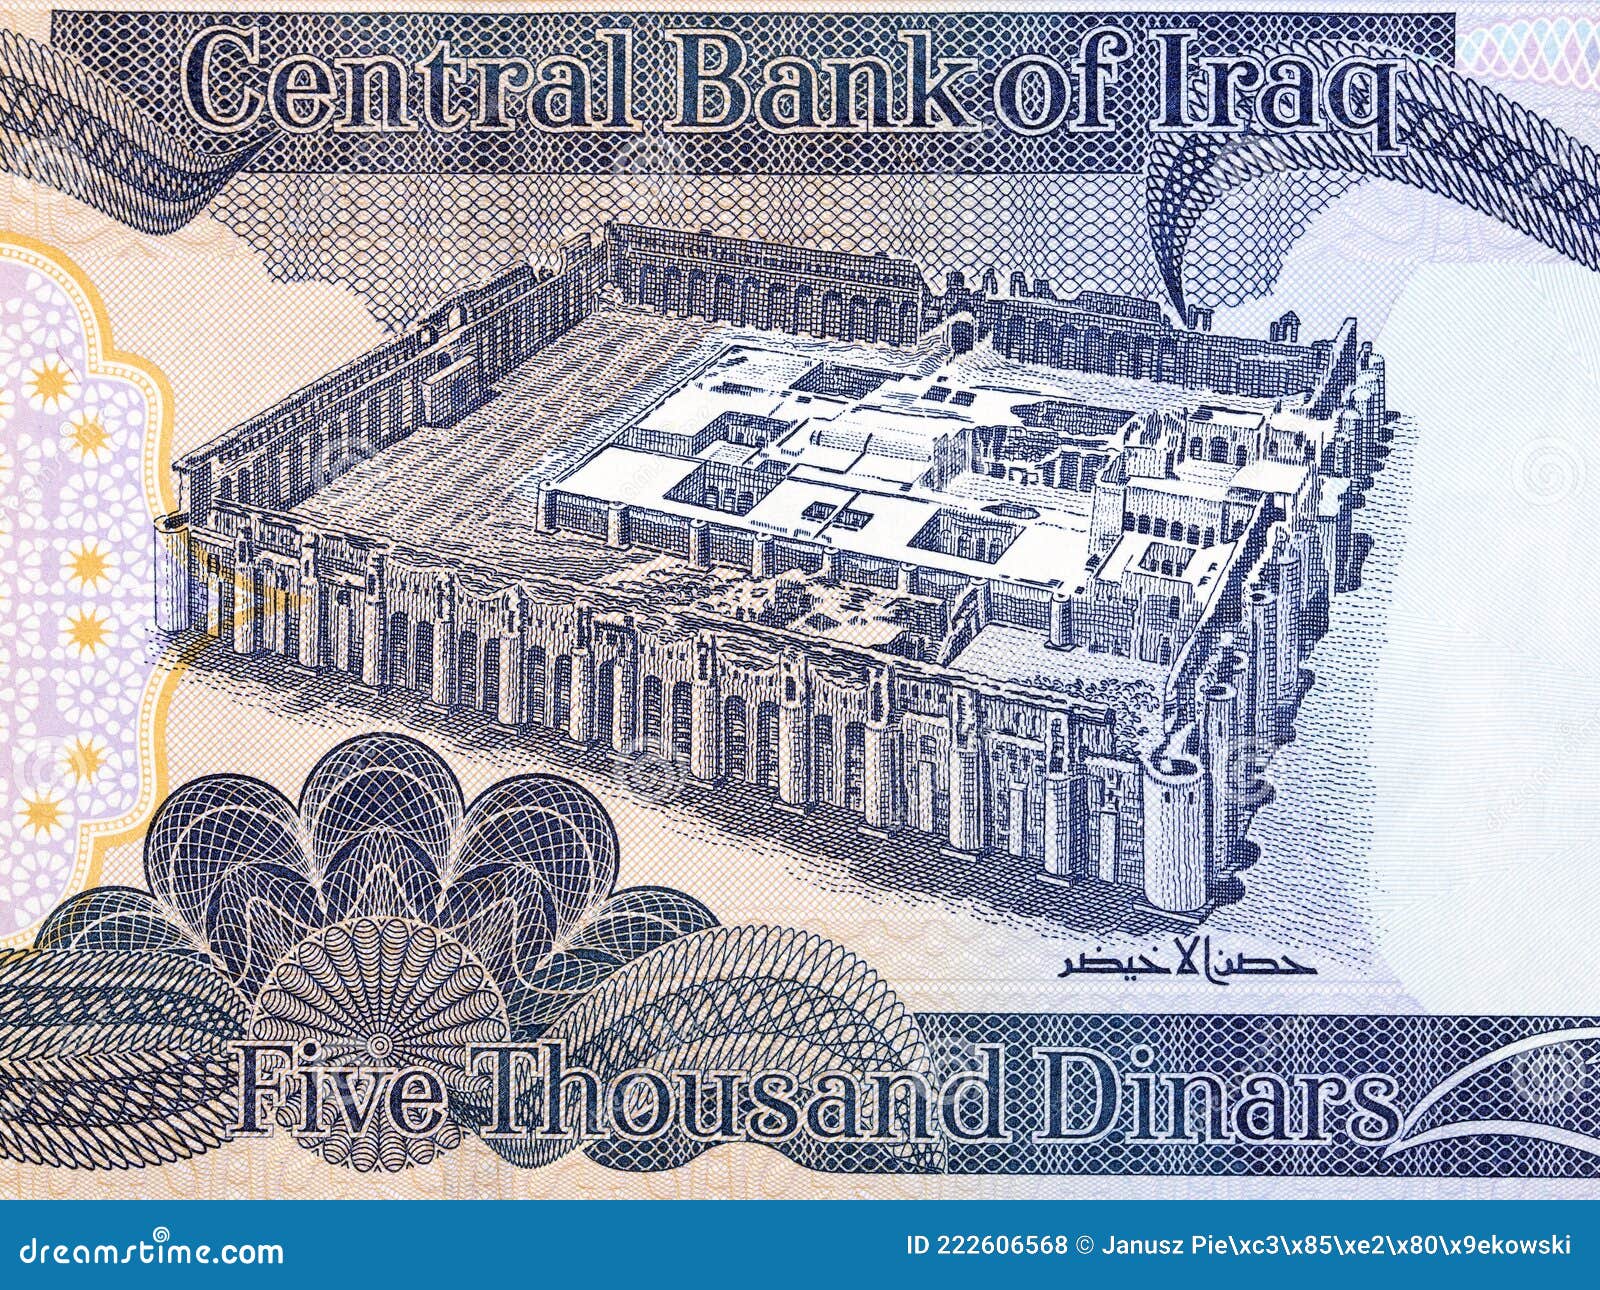 abbasid palace of ukhaider from iraqi money